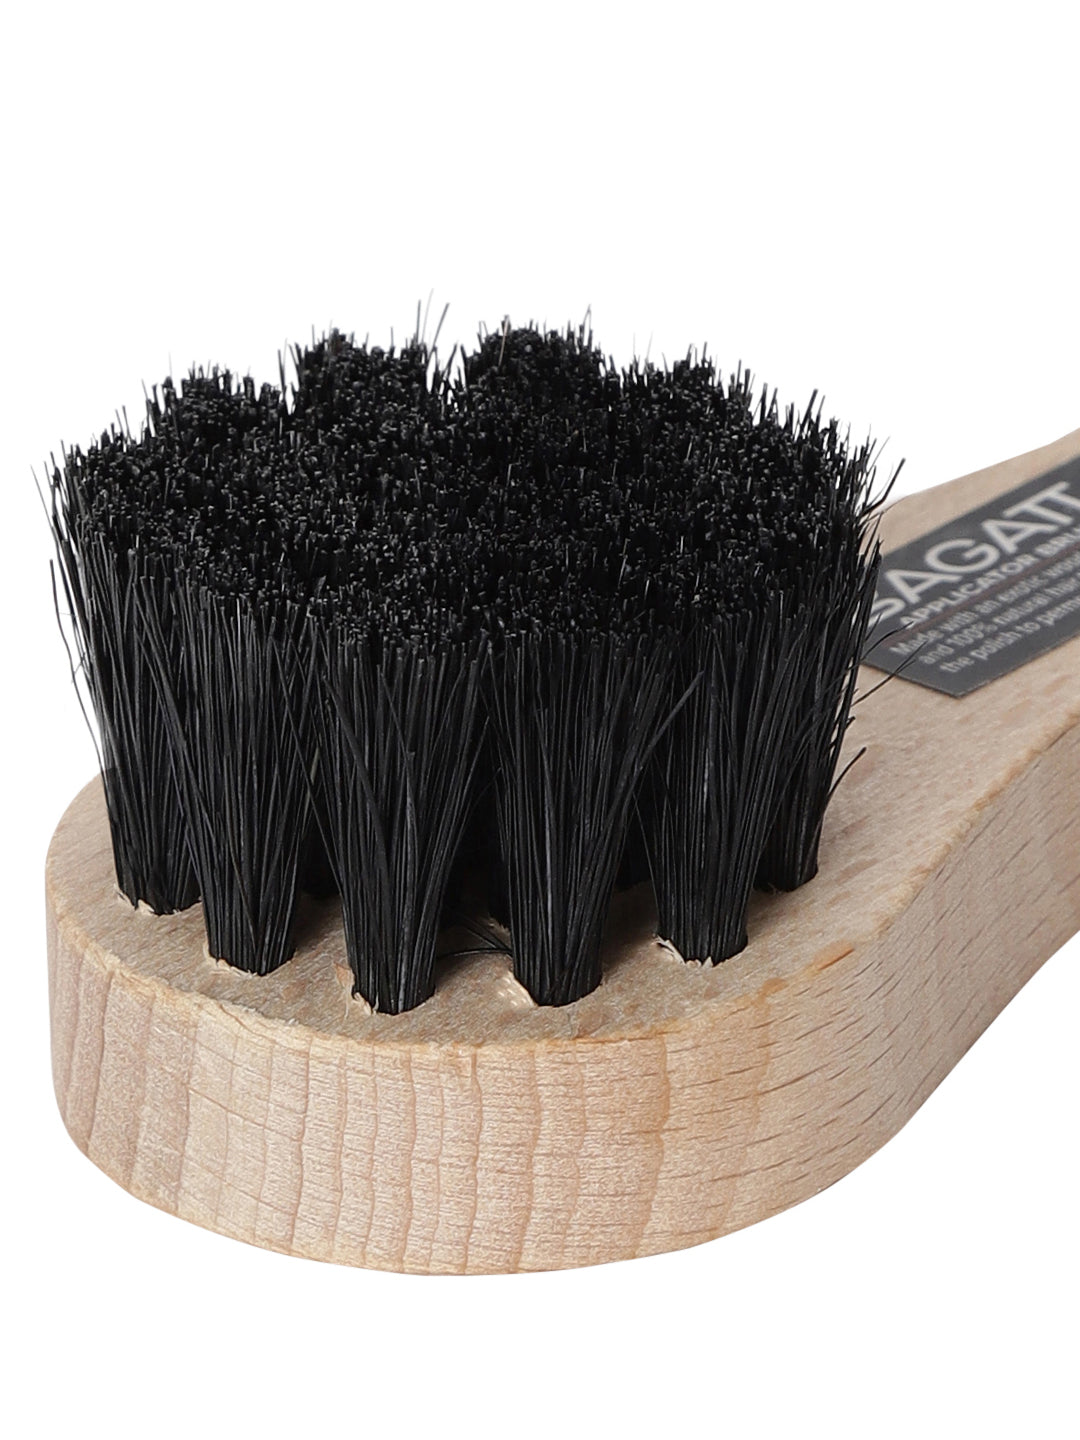 BAGATT Black Applicator Brush